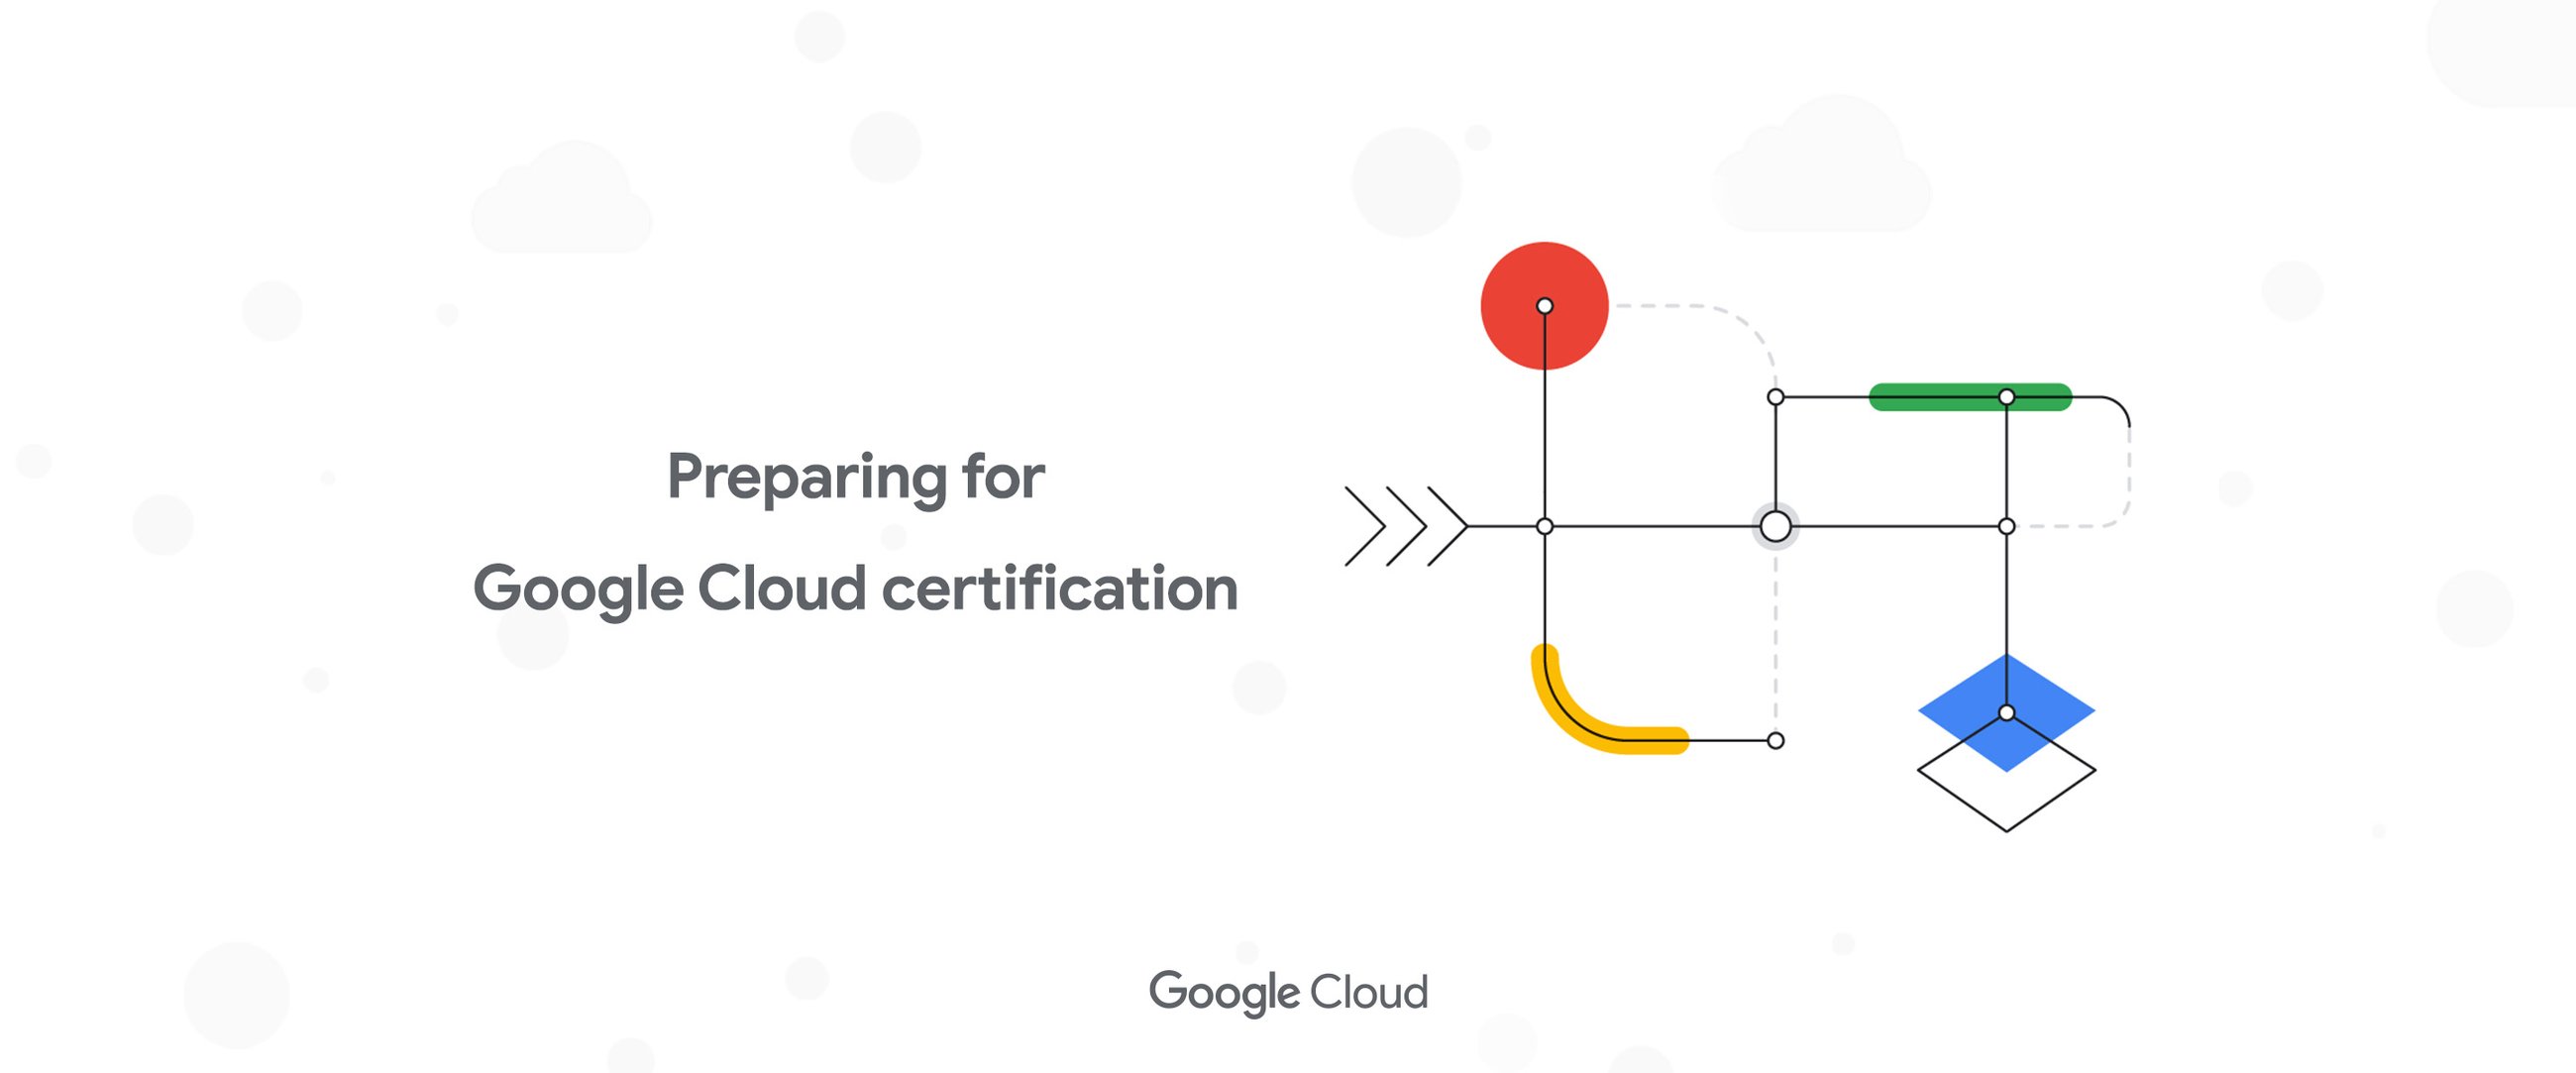 https://storage.googleapis.com/gweb-cloudblog-publish/images/google_cloud_certification.max-2600x2600.jpg